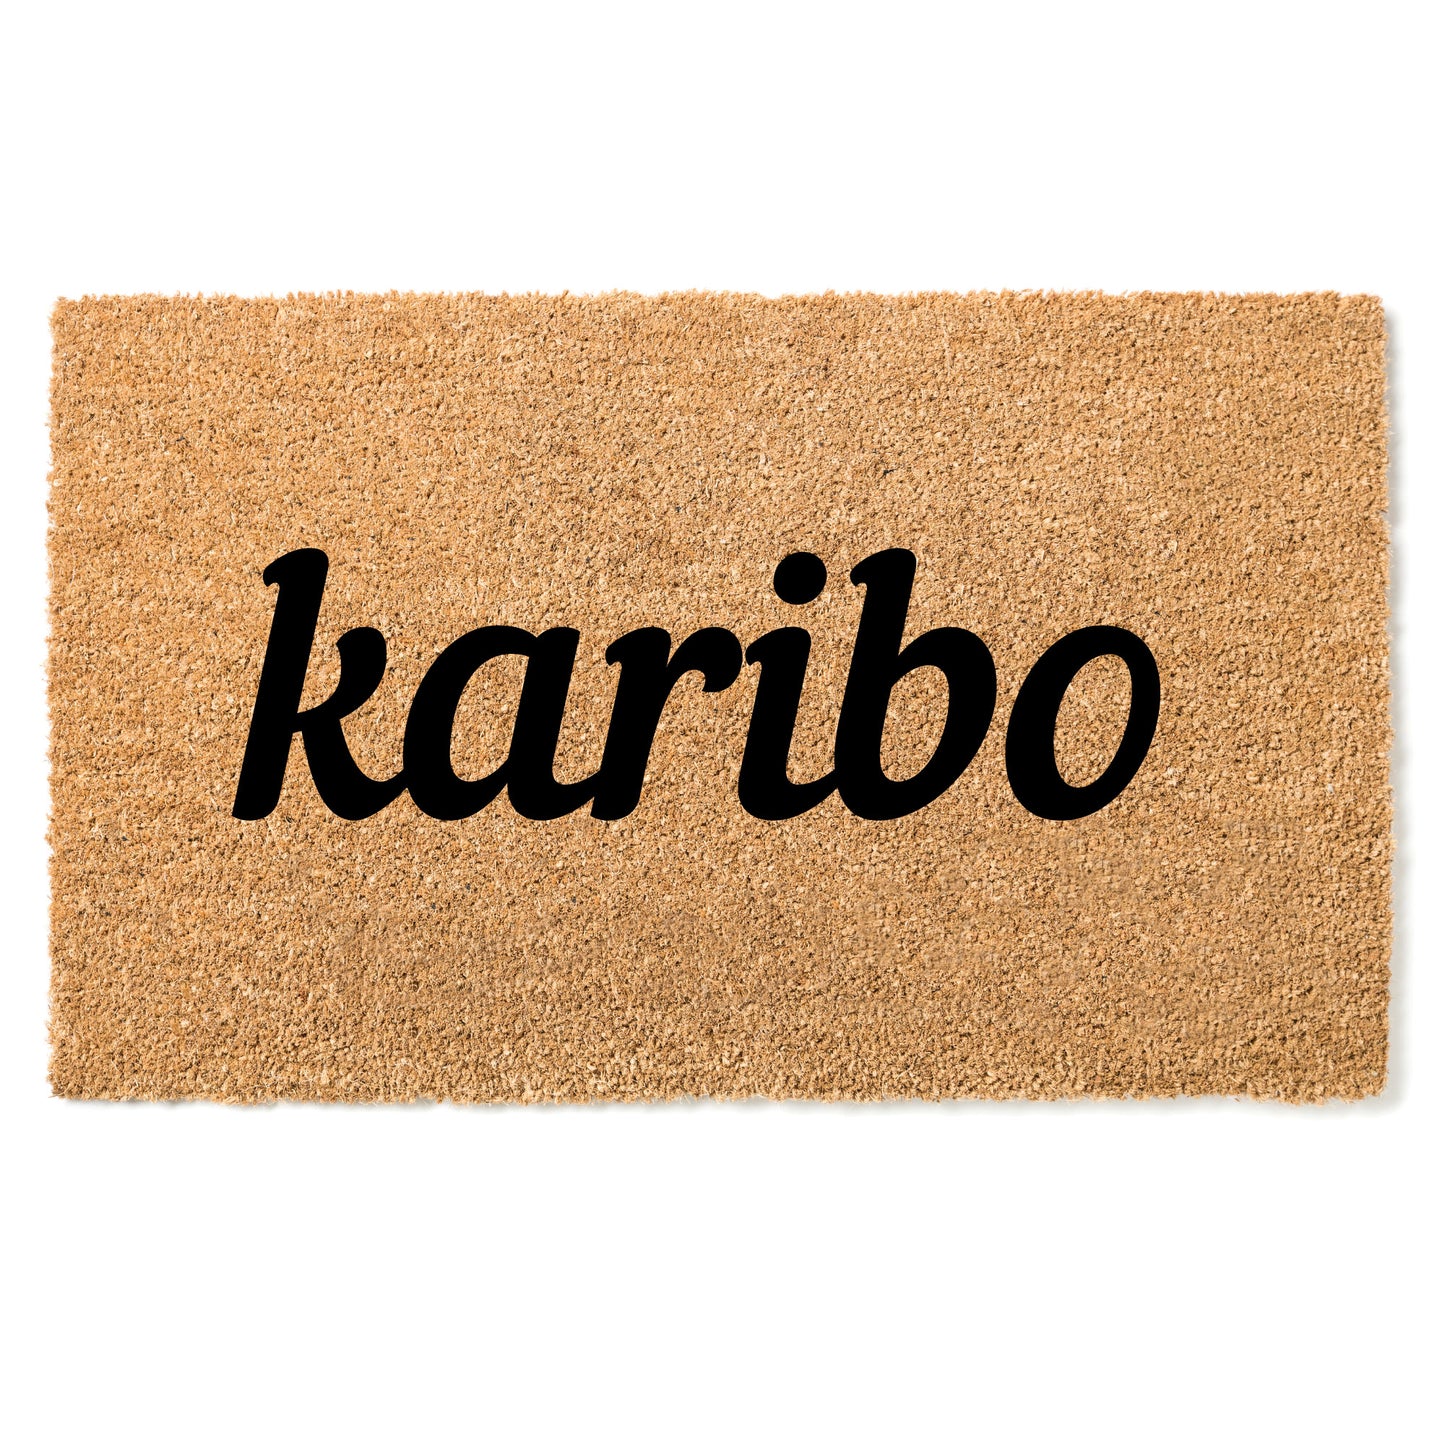 "Karibo" door mat - "Welcome" in Shibushi